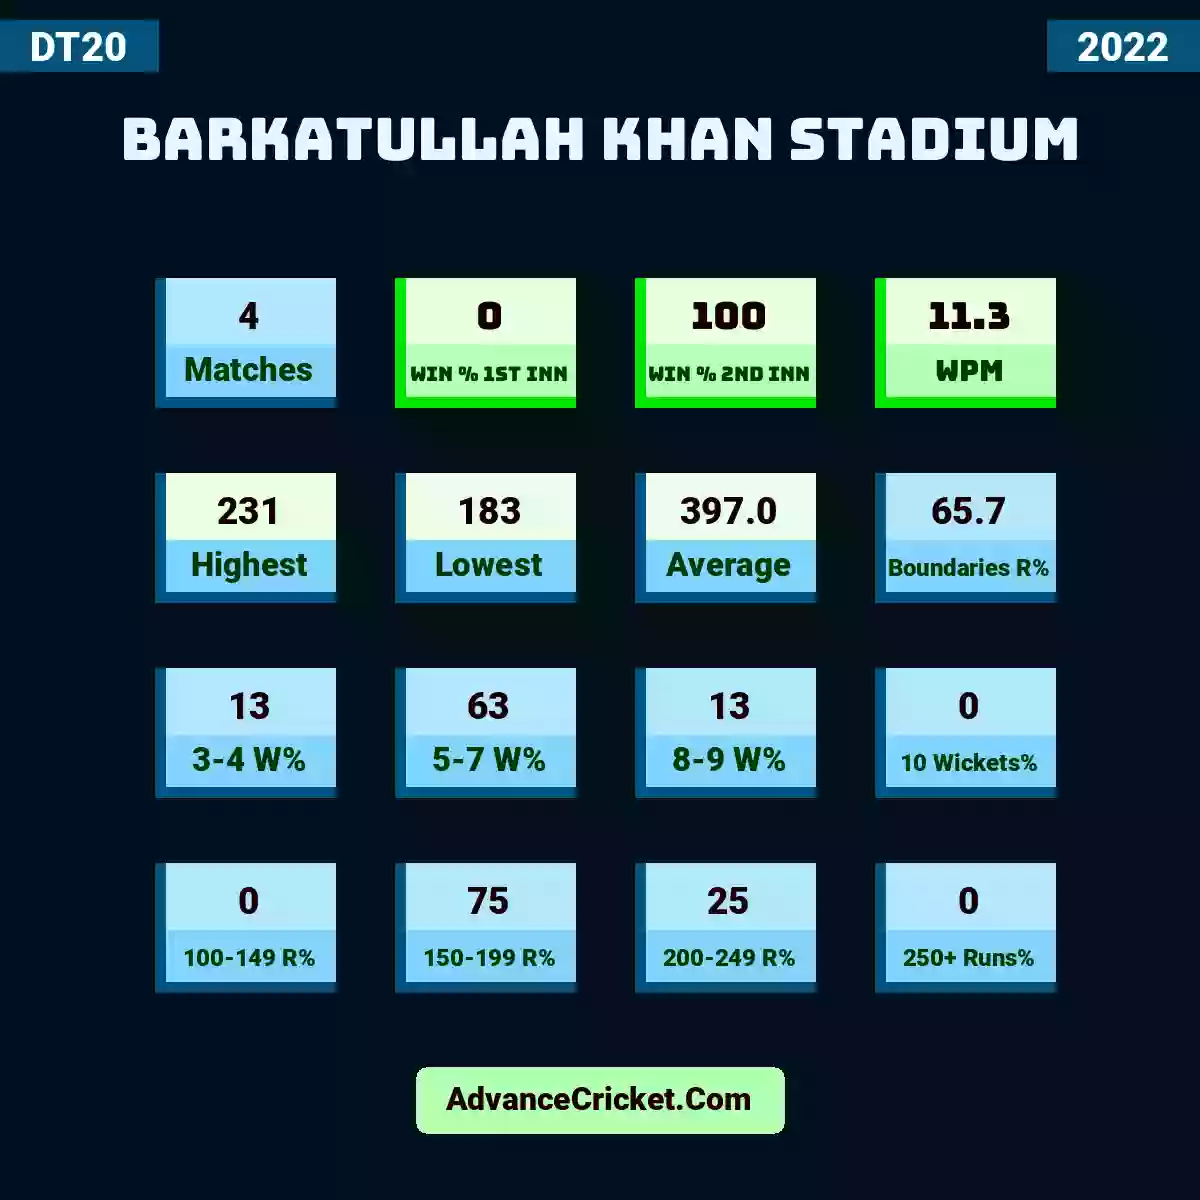 Image showing Barkatullah Khan Stadium with Matches: 4, Win % 1st Inn: 0, Win % 2nd Inn: 100, WPM: 11.3, Highest: 231, Lowest: 183, Average: 397.0, Boundaries R%: 65.7, 3-4 W%: 13, 5-7 W%: 63, 8-9 W%: 13, 10 Wickets%: 0, 100-149 R%: 0, 150-199 R%: 75, 200-249 R%: 25, 250+ Runs%: 0.